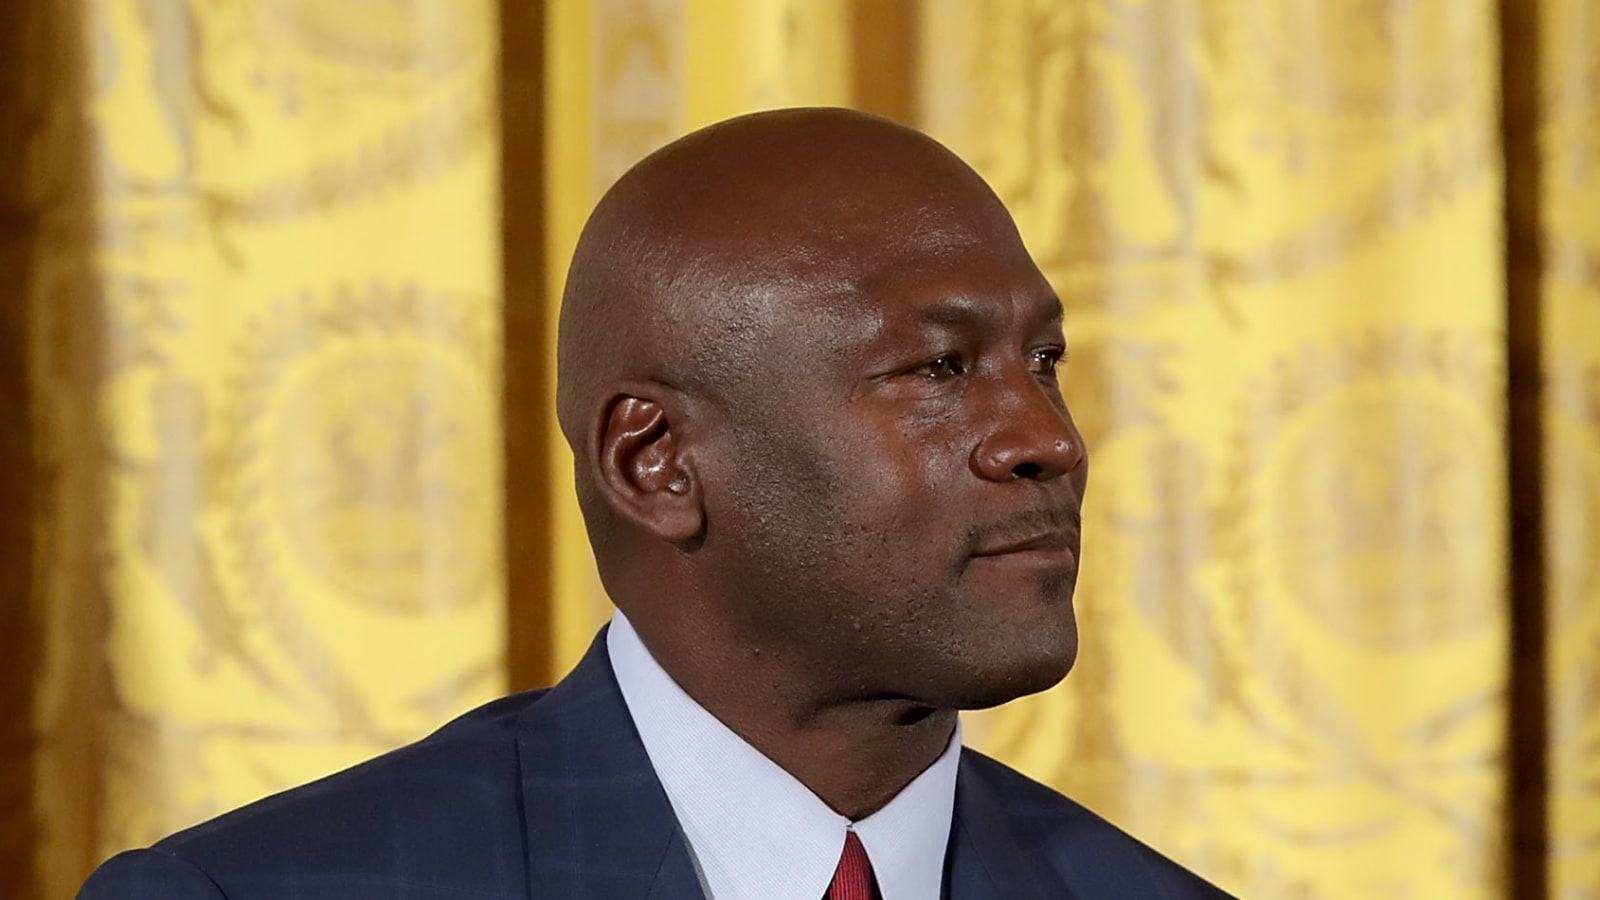 Michael Jordan's Jordan Brand Pledges $100 Million Towards Racial Equality